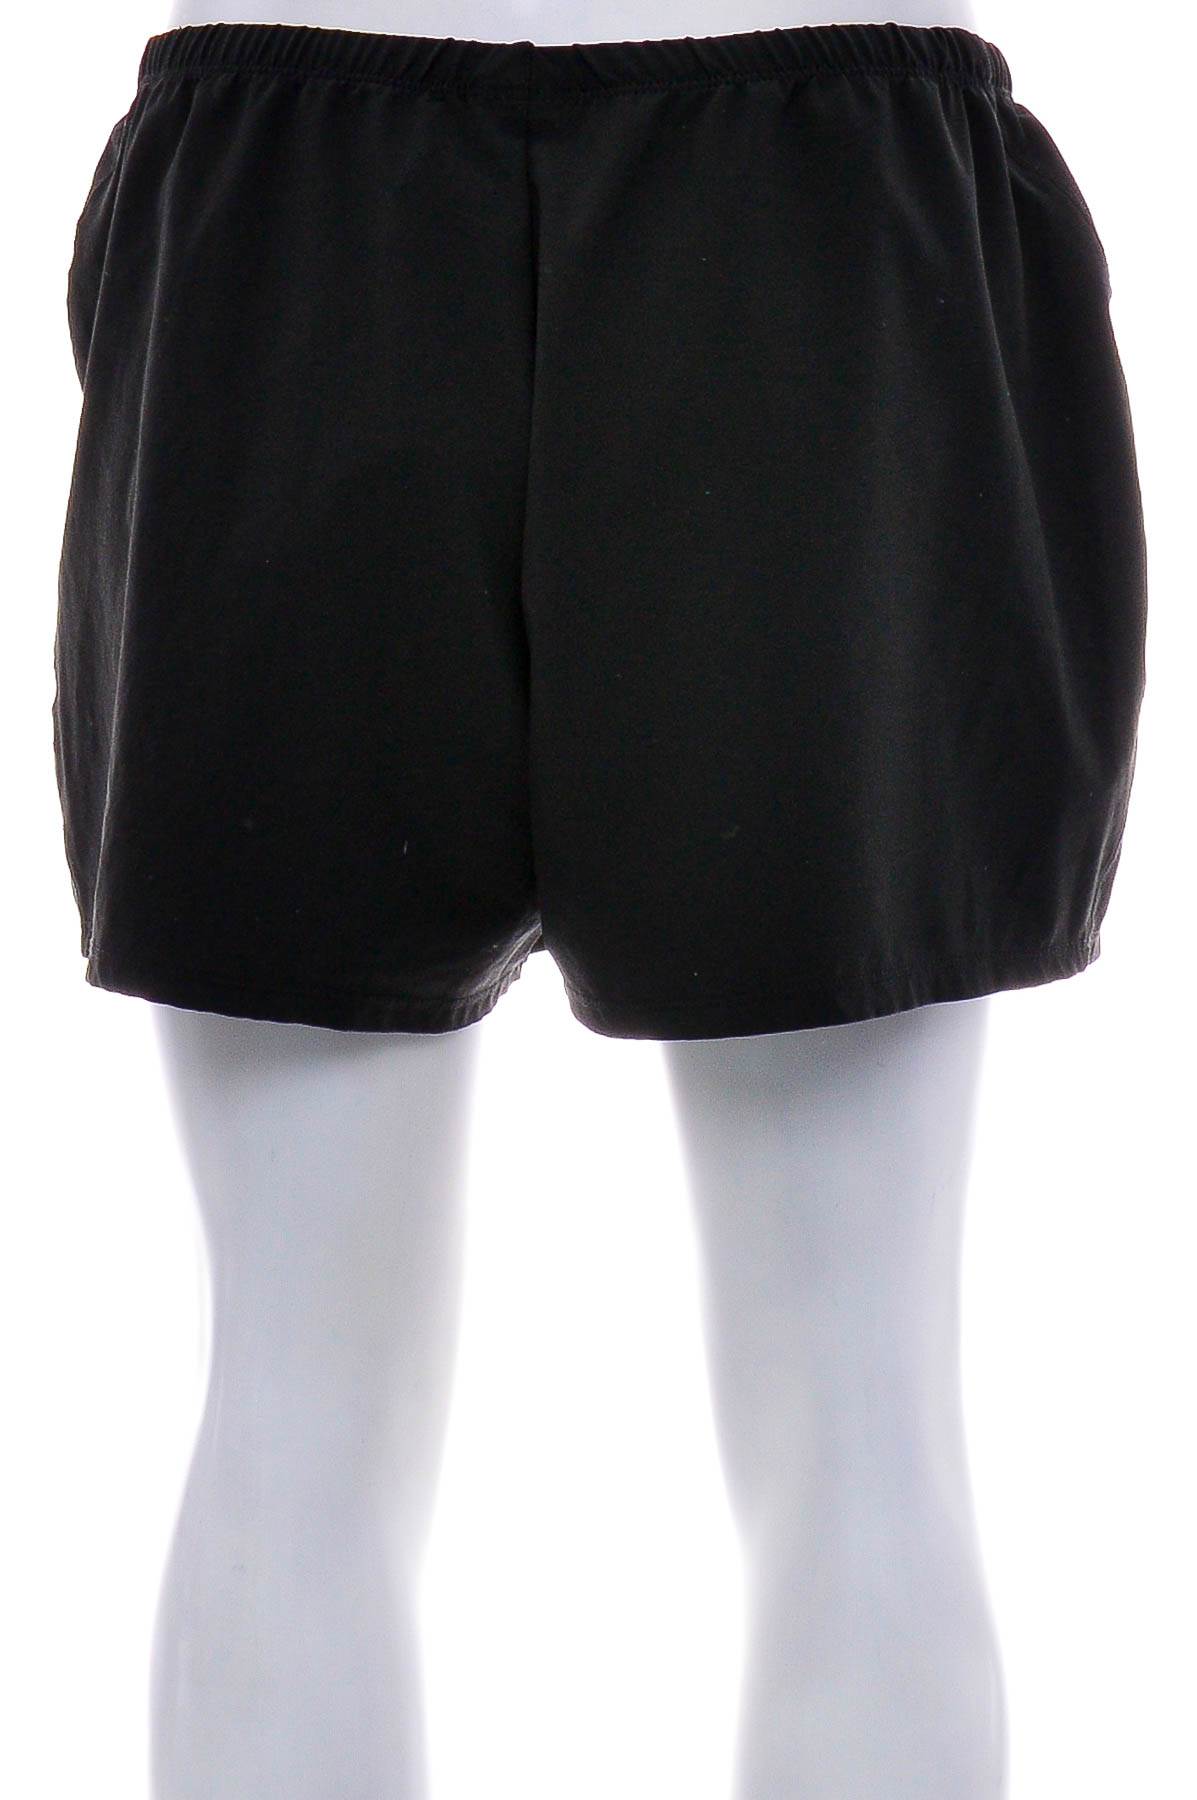 Female shorts - Kalenji - 1